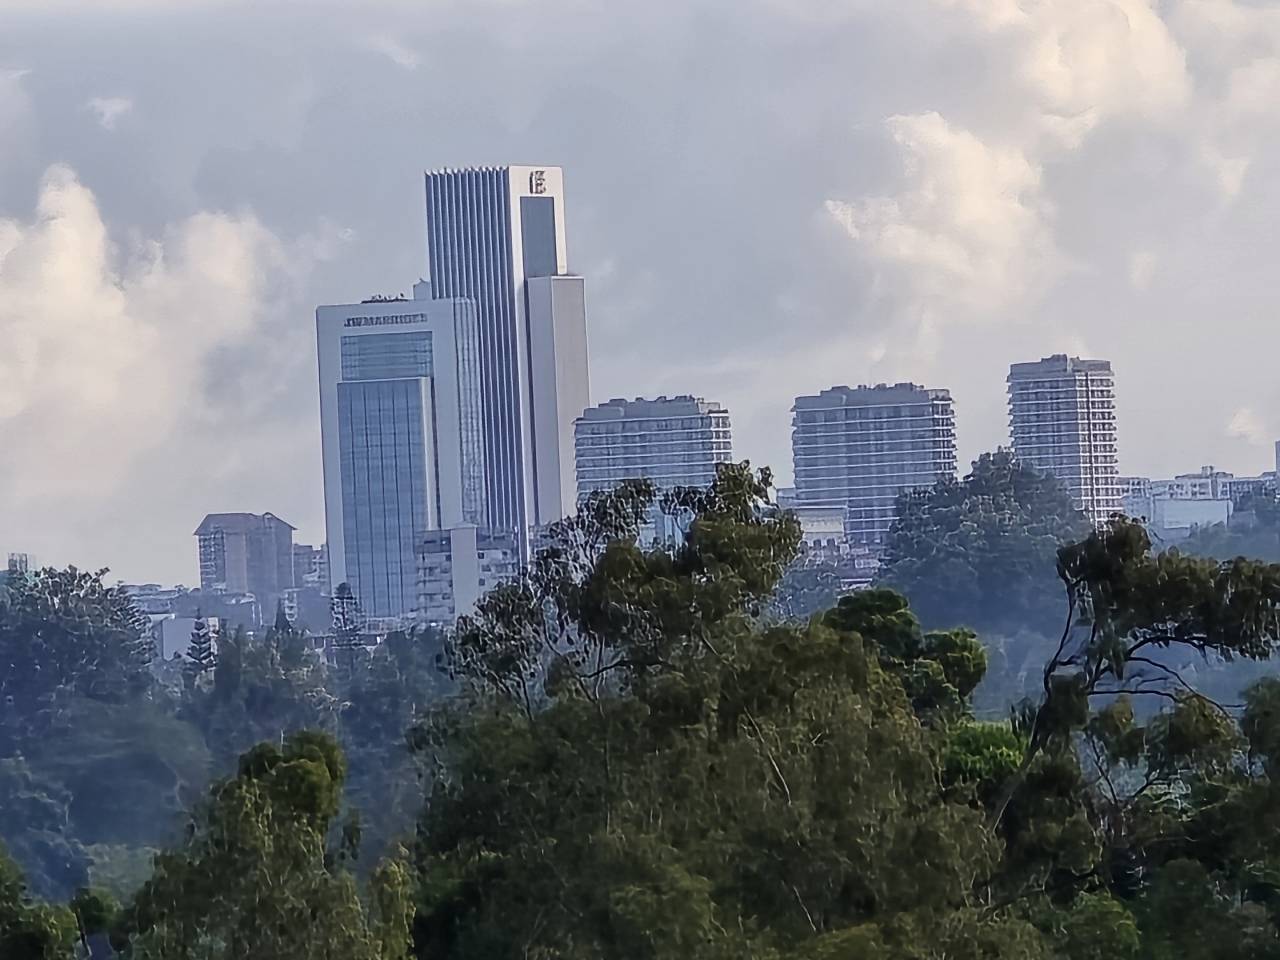 Kenya CBD skyline